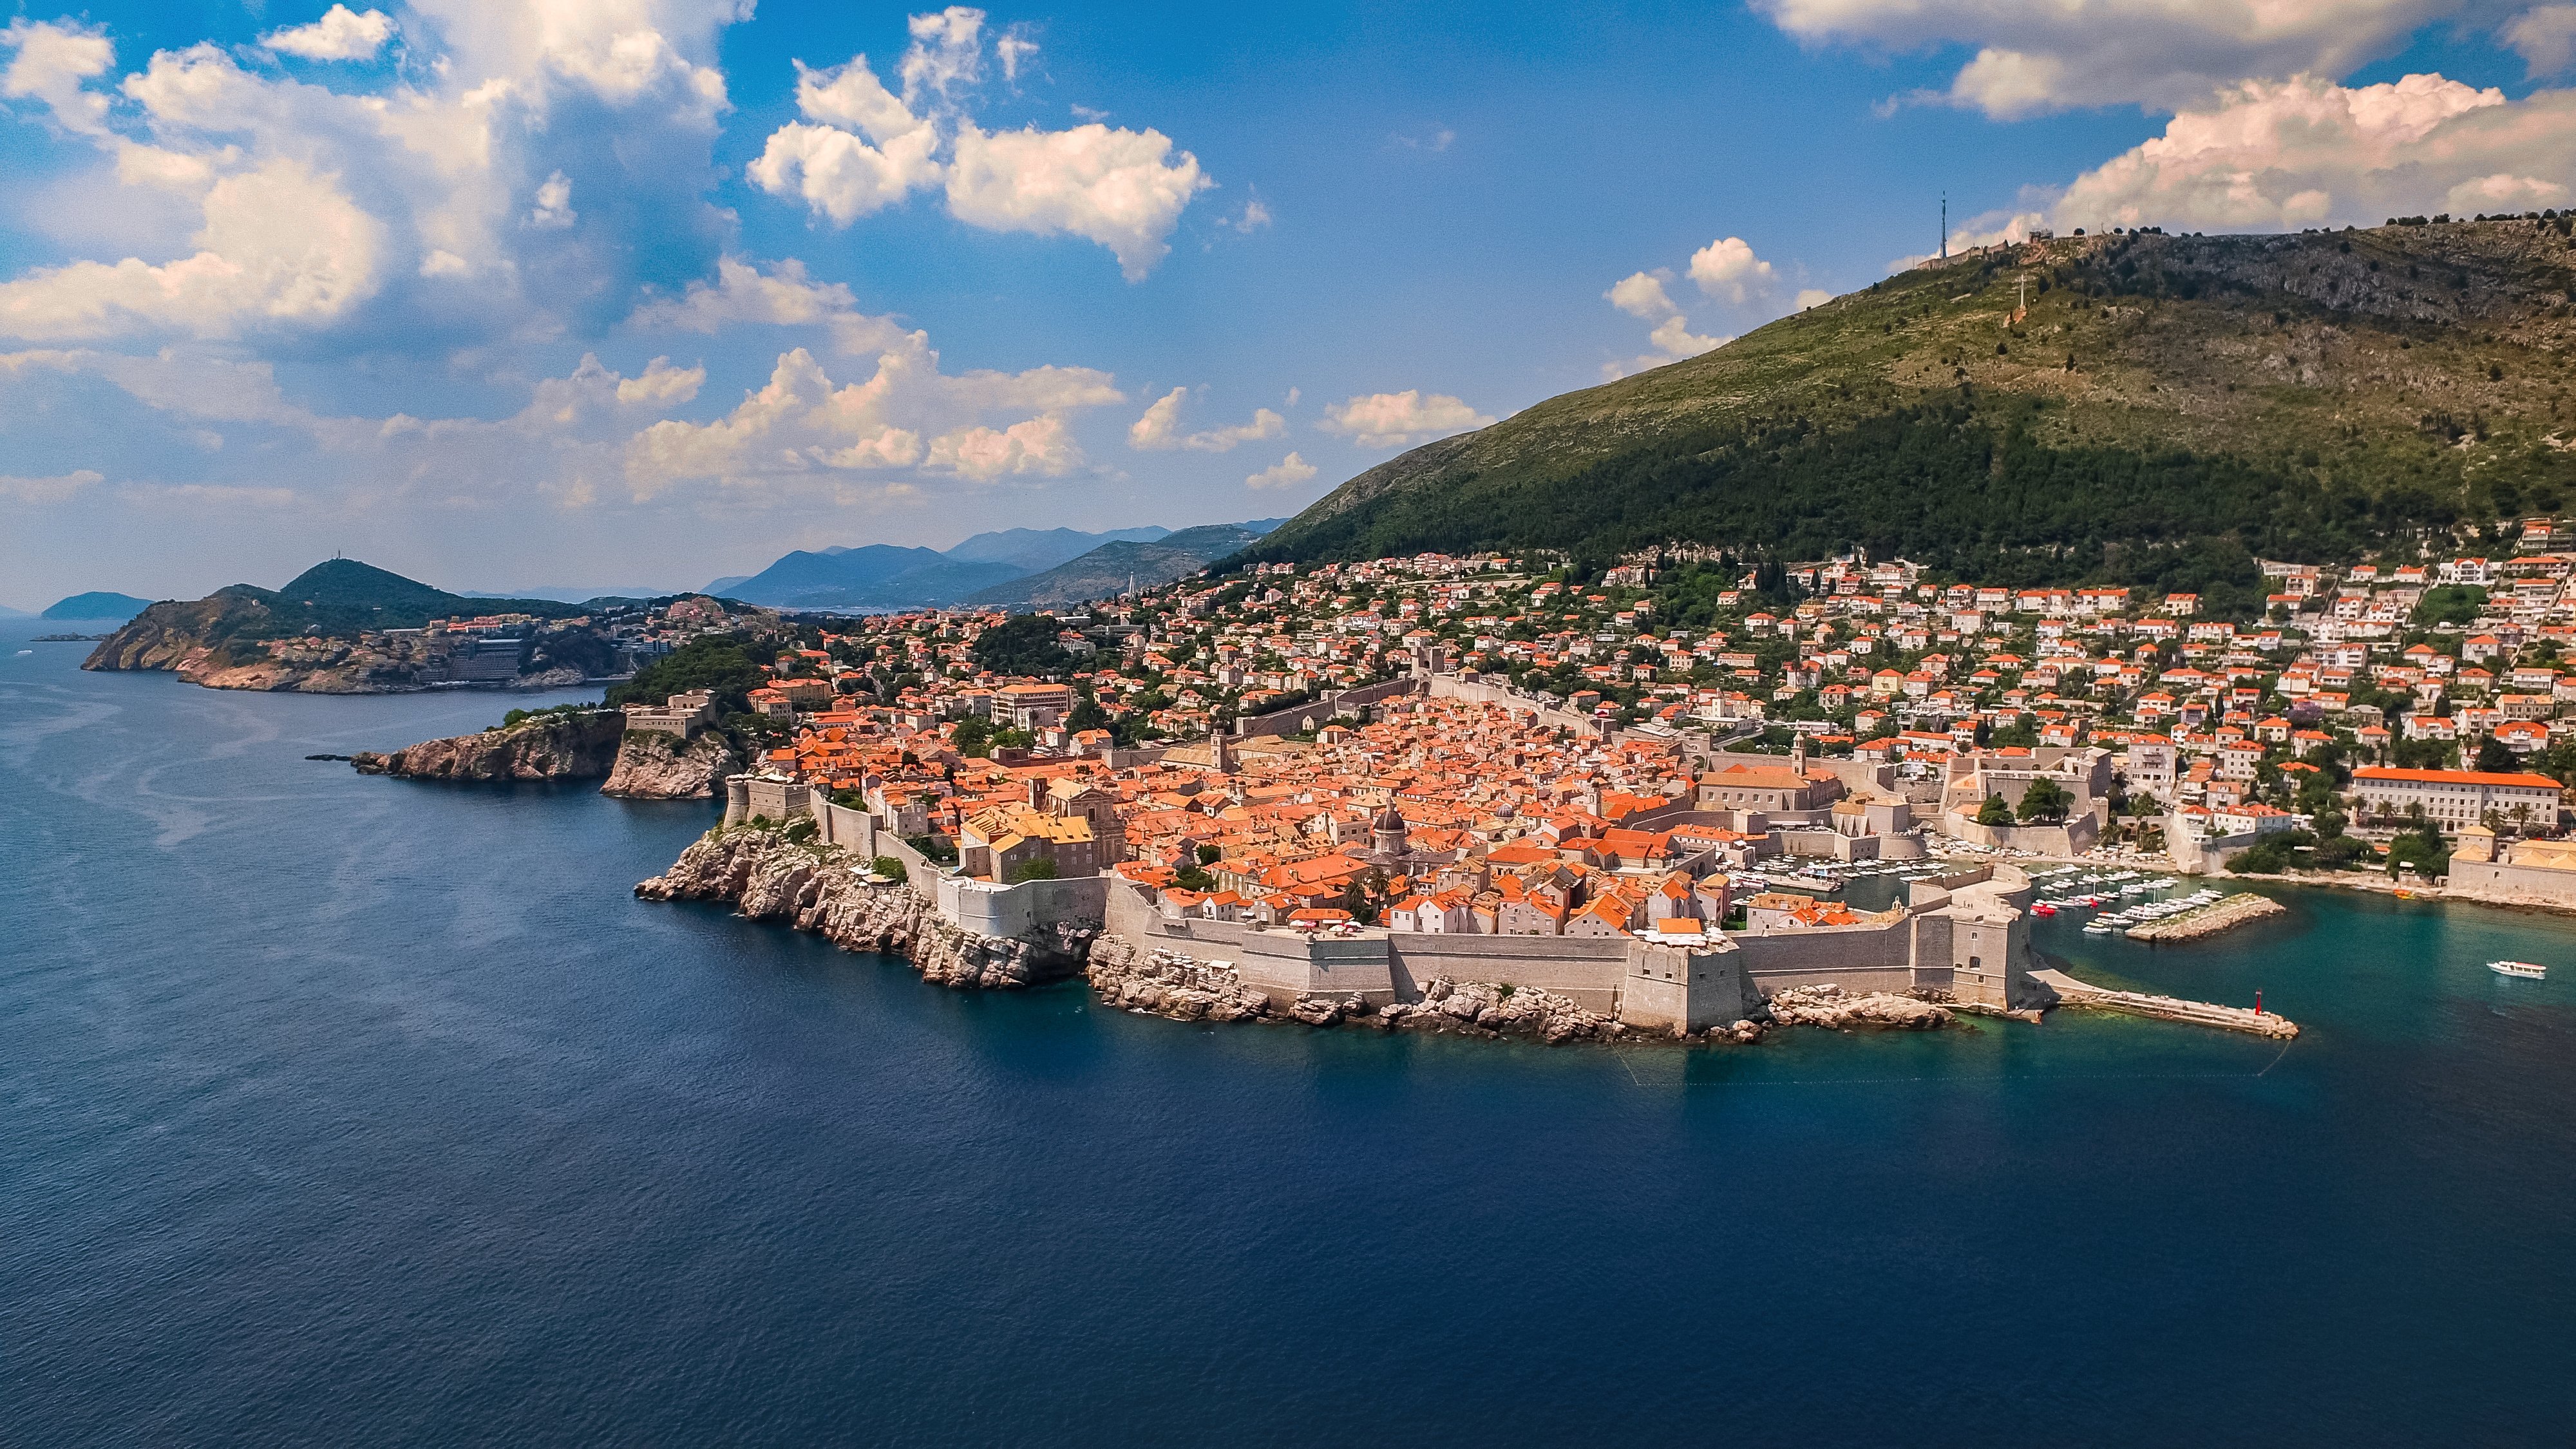 00 - Intro - Jane Foster - 2 Unesco sites - Dubrovnik old town - credit Ivo Biocina